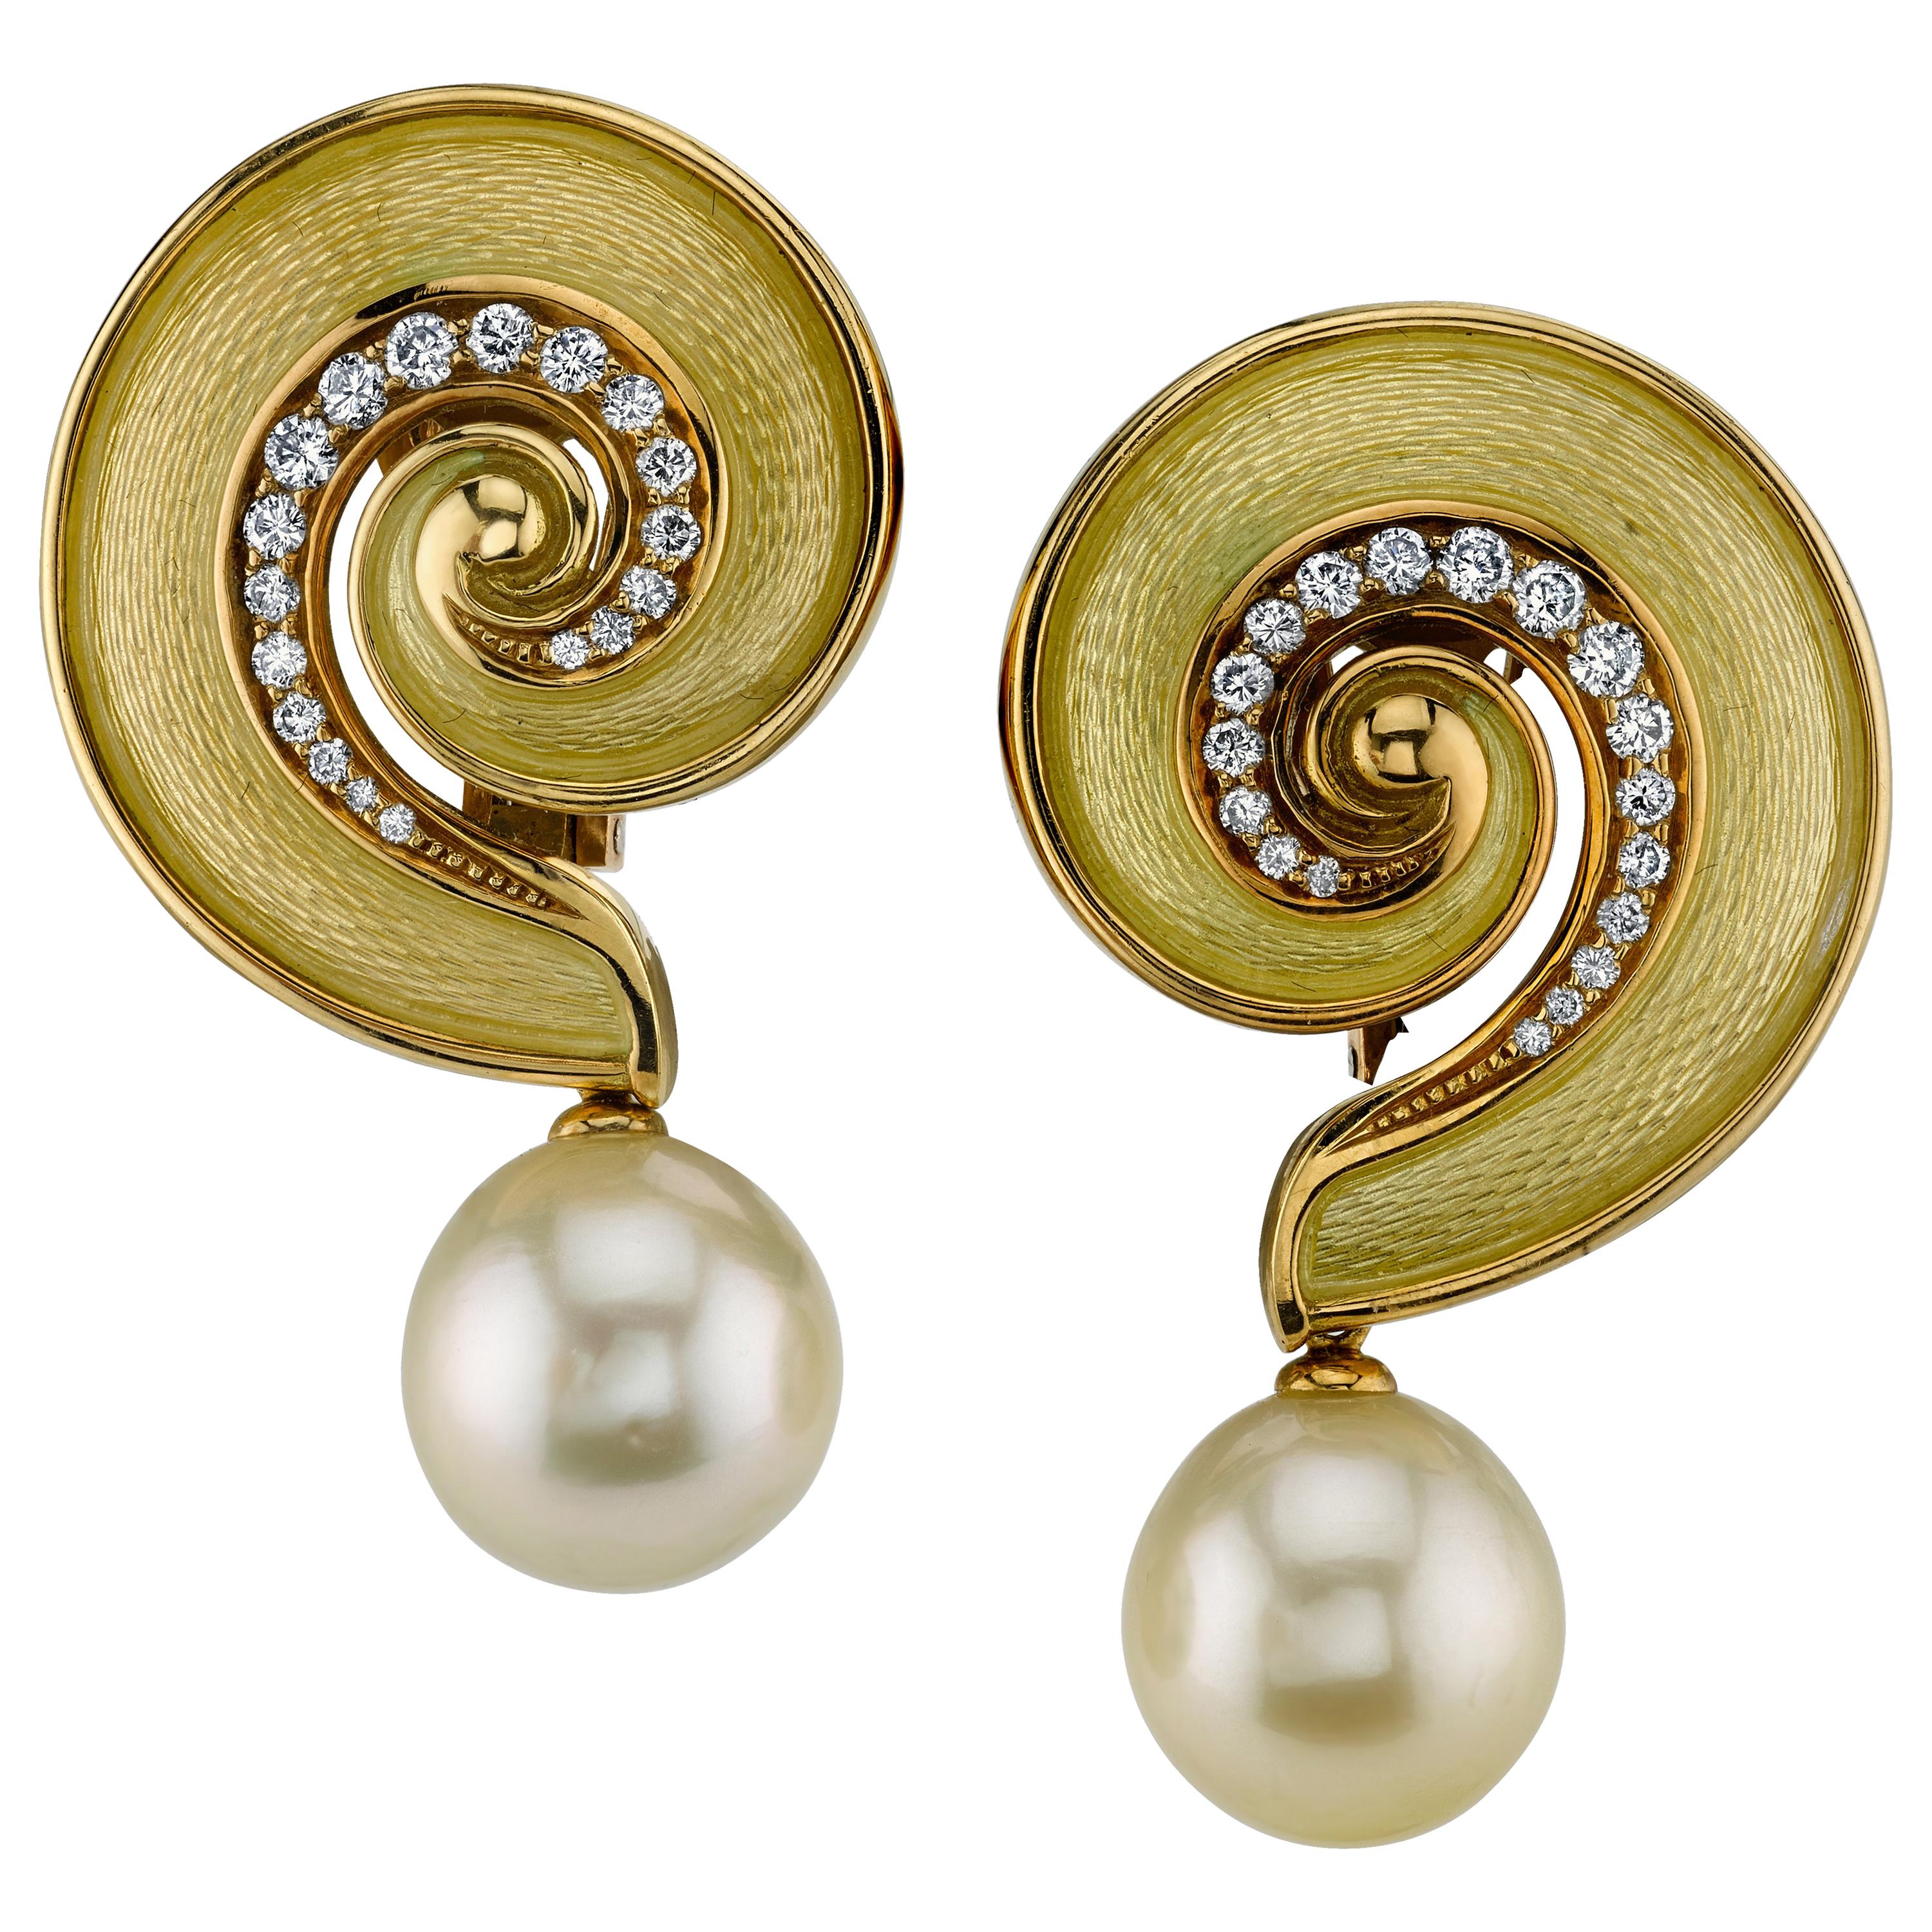 De Vroomen Diamond and Enamel Drop Earrings in Gold with Detachable Pearls